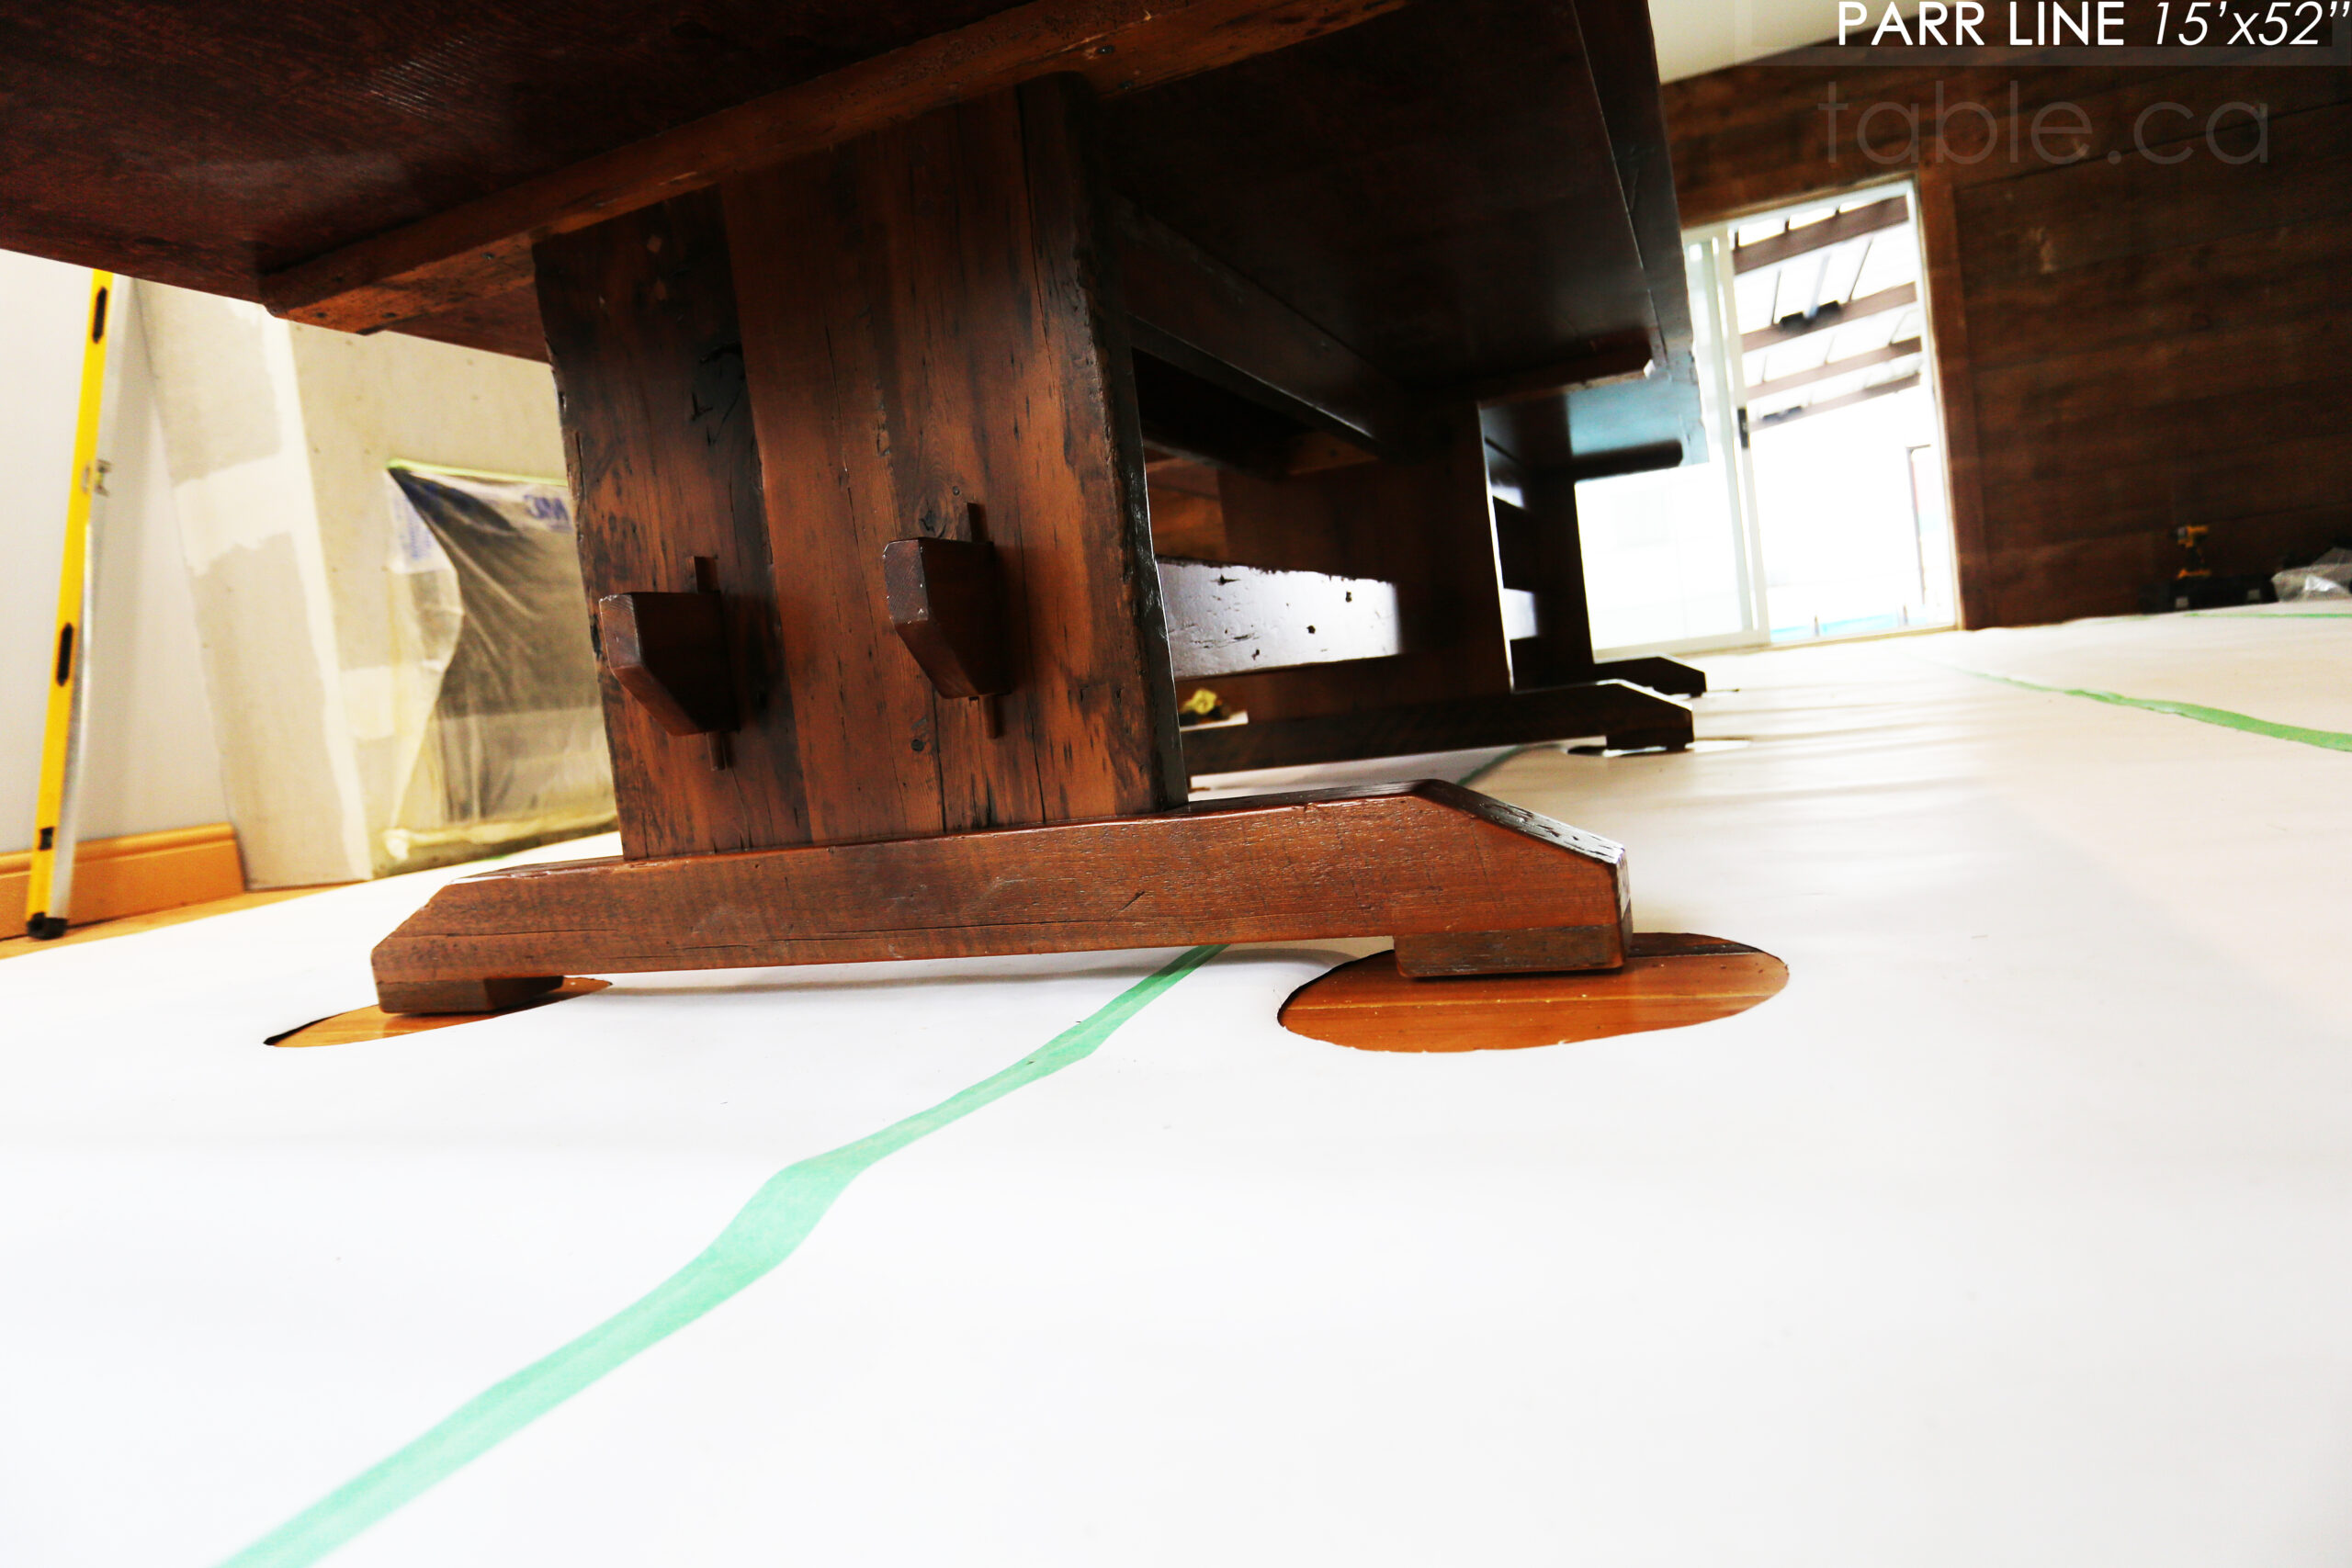 Custom Reclaimed Wood Boardroom Table by HD Threshing Floor Furniture / www.table.ca